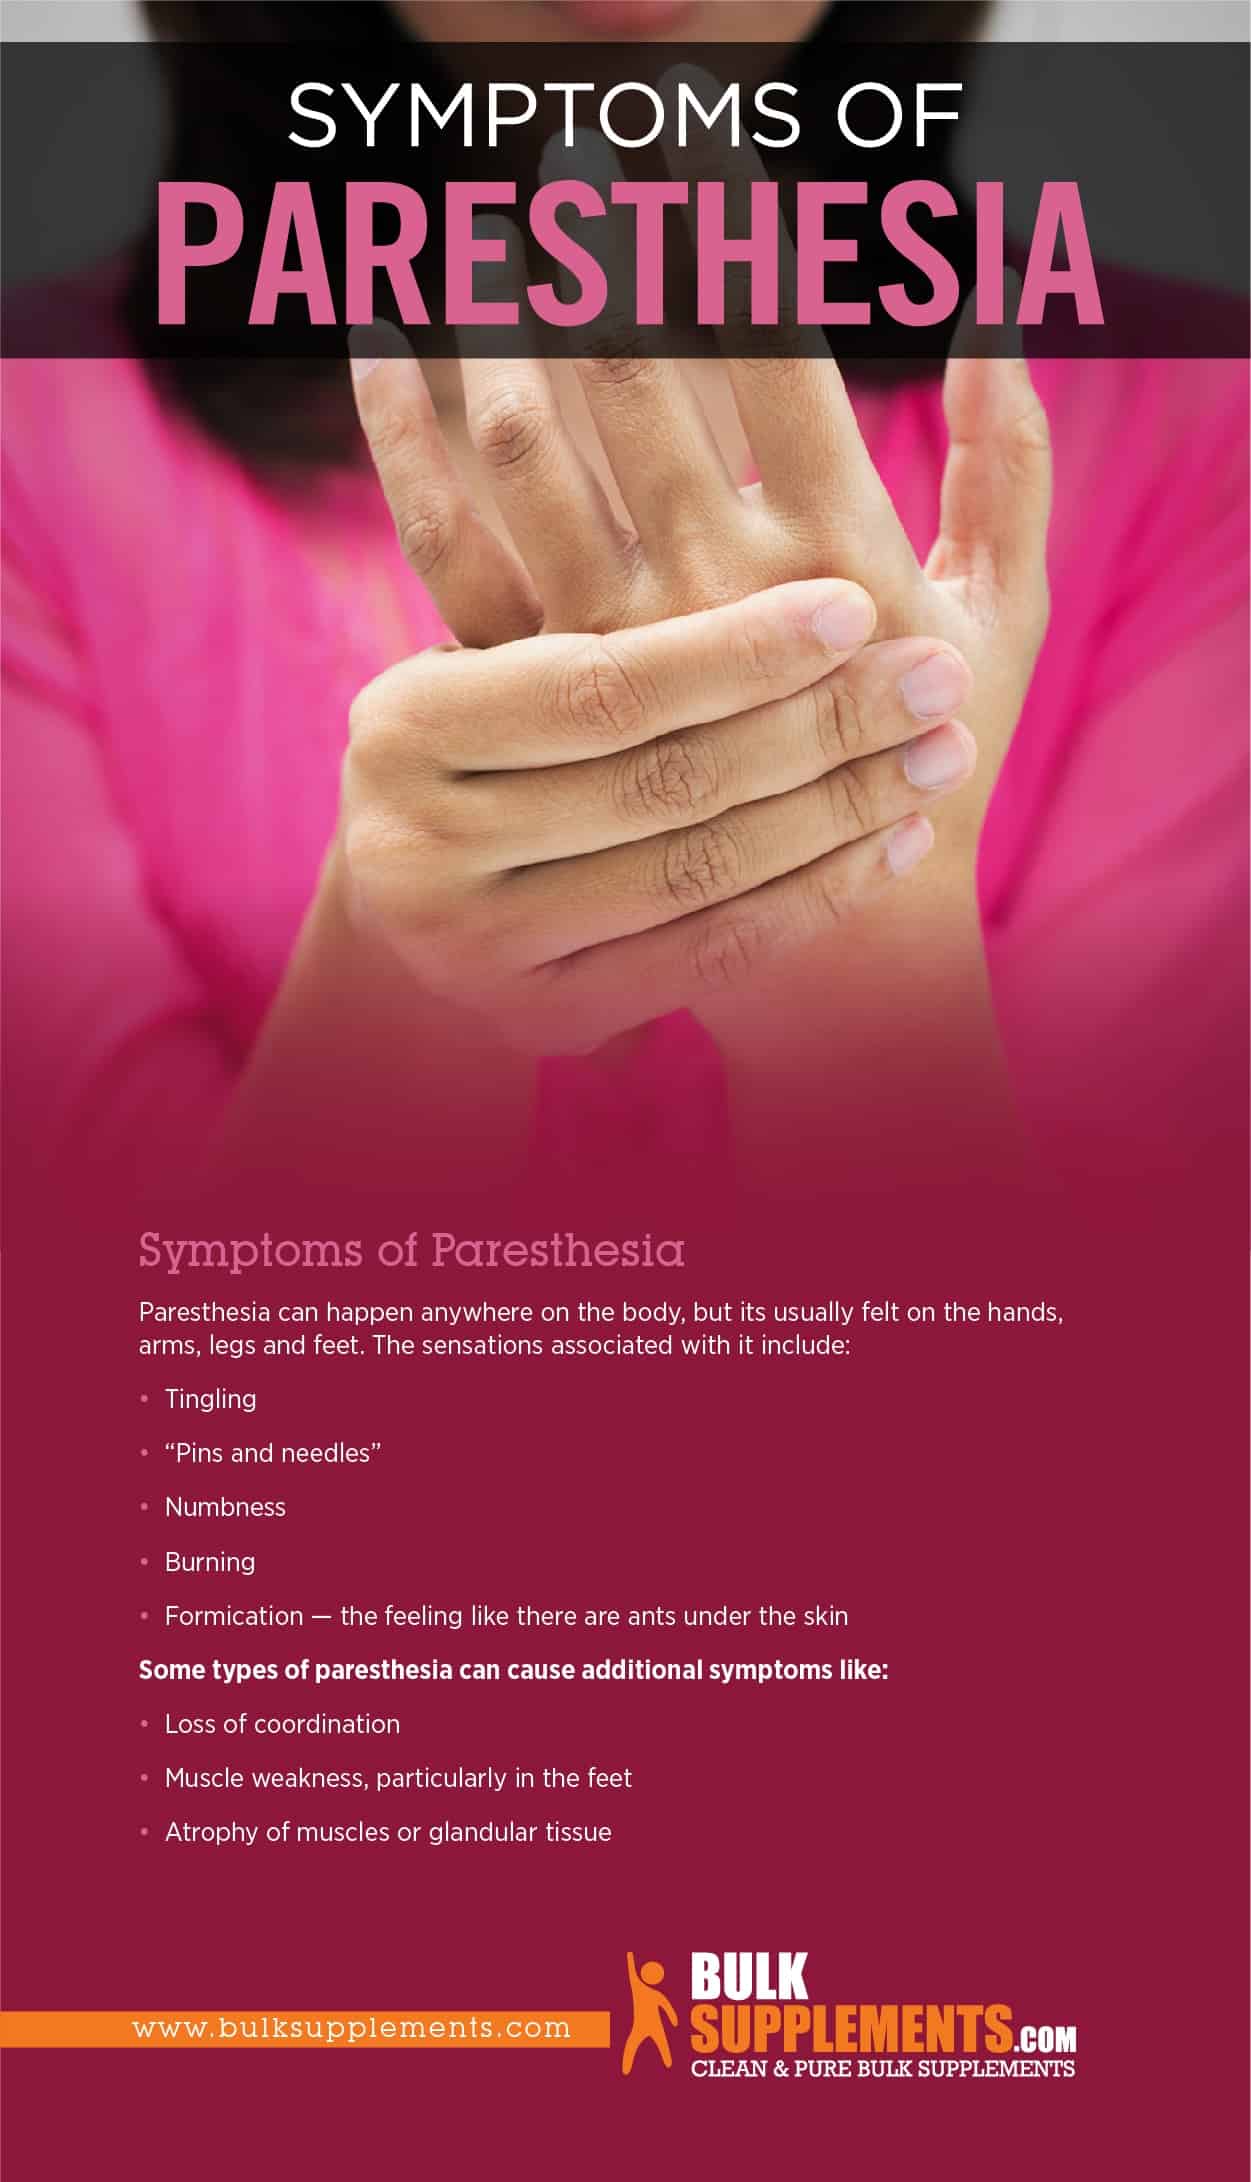 Symptoms of Paresthesia